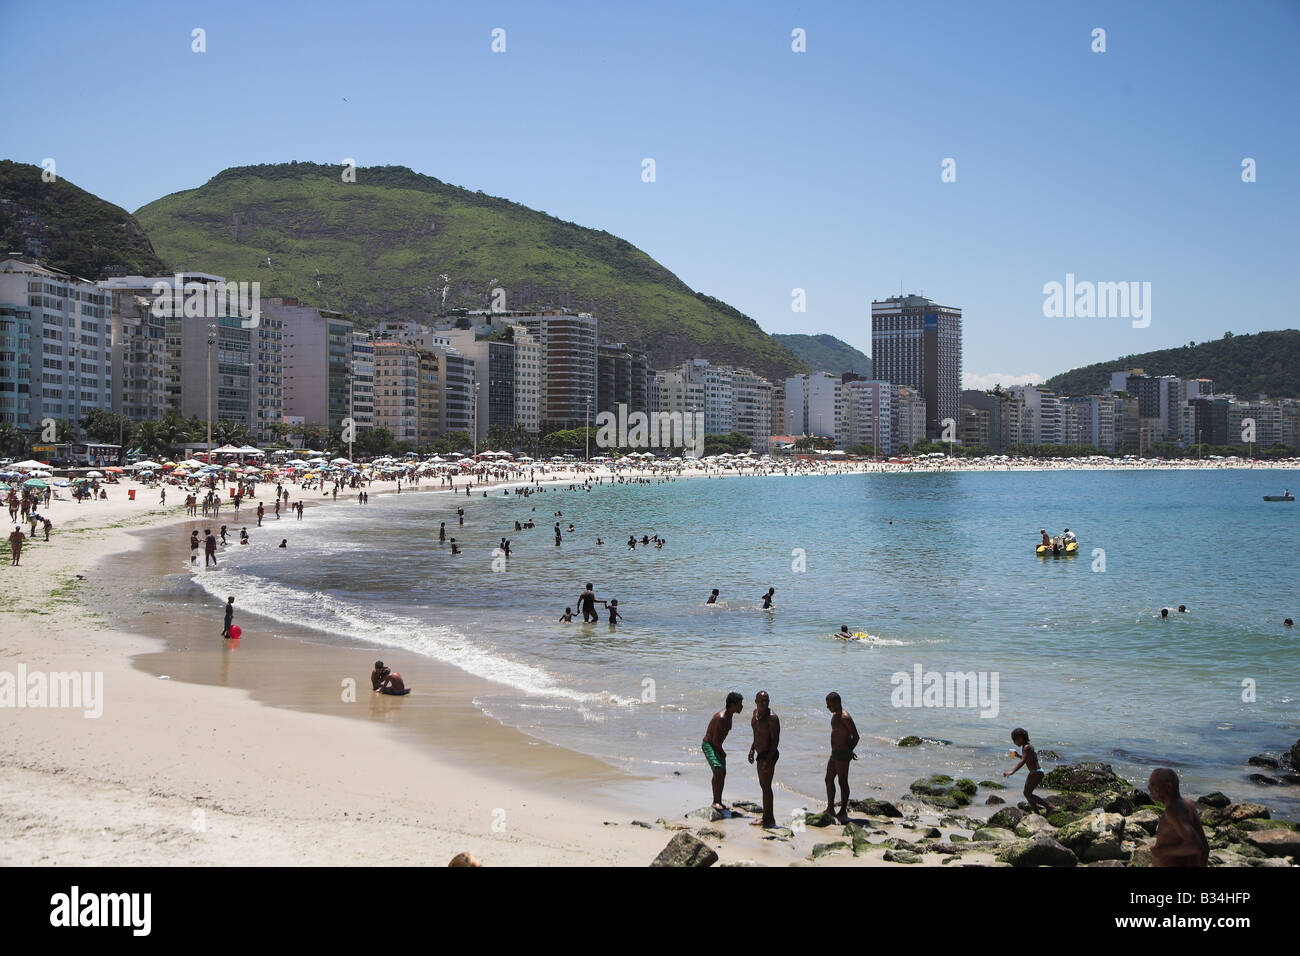 A view of Copacabana beach and skyline in Rio de Janeiro in Brazil. Stock Photo